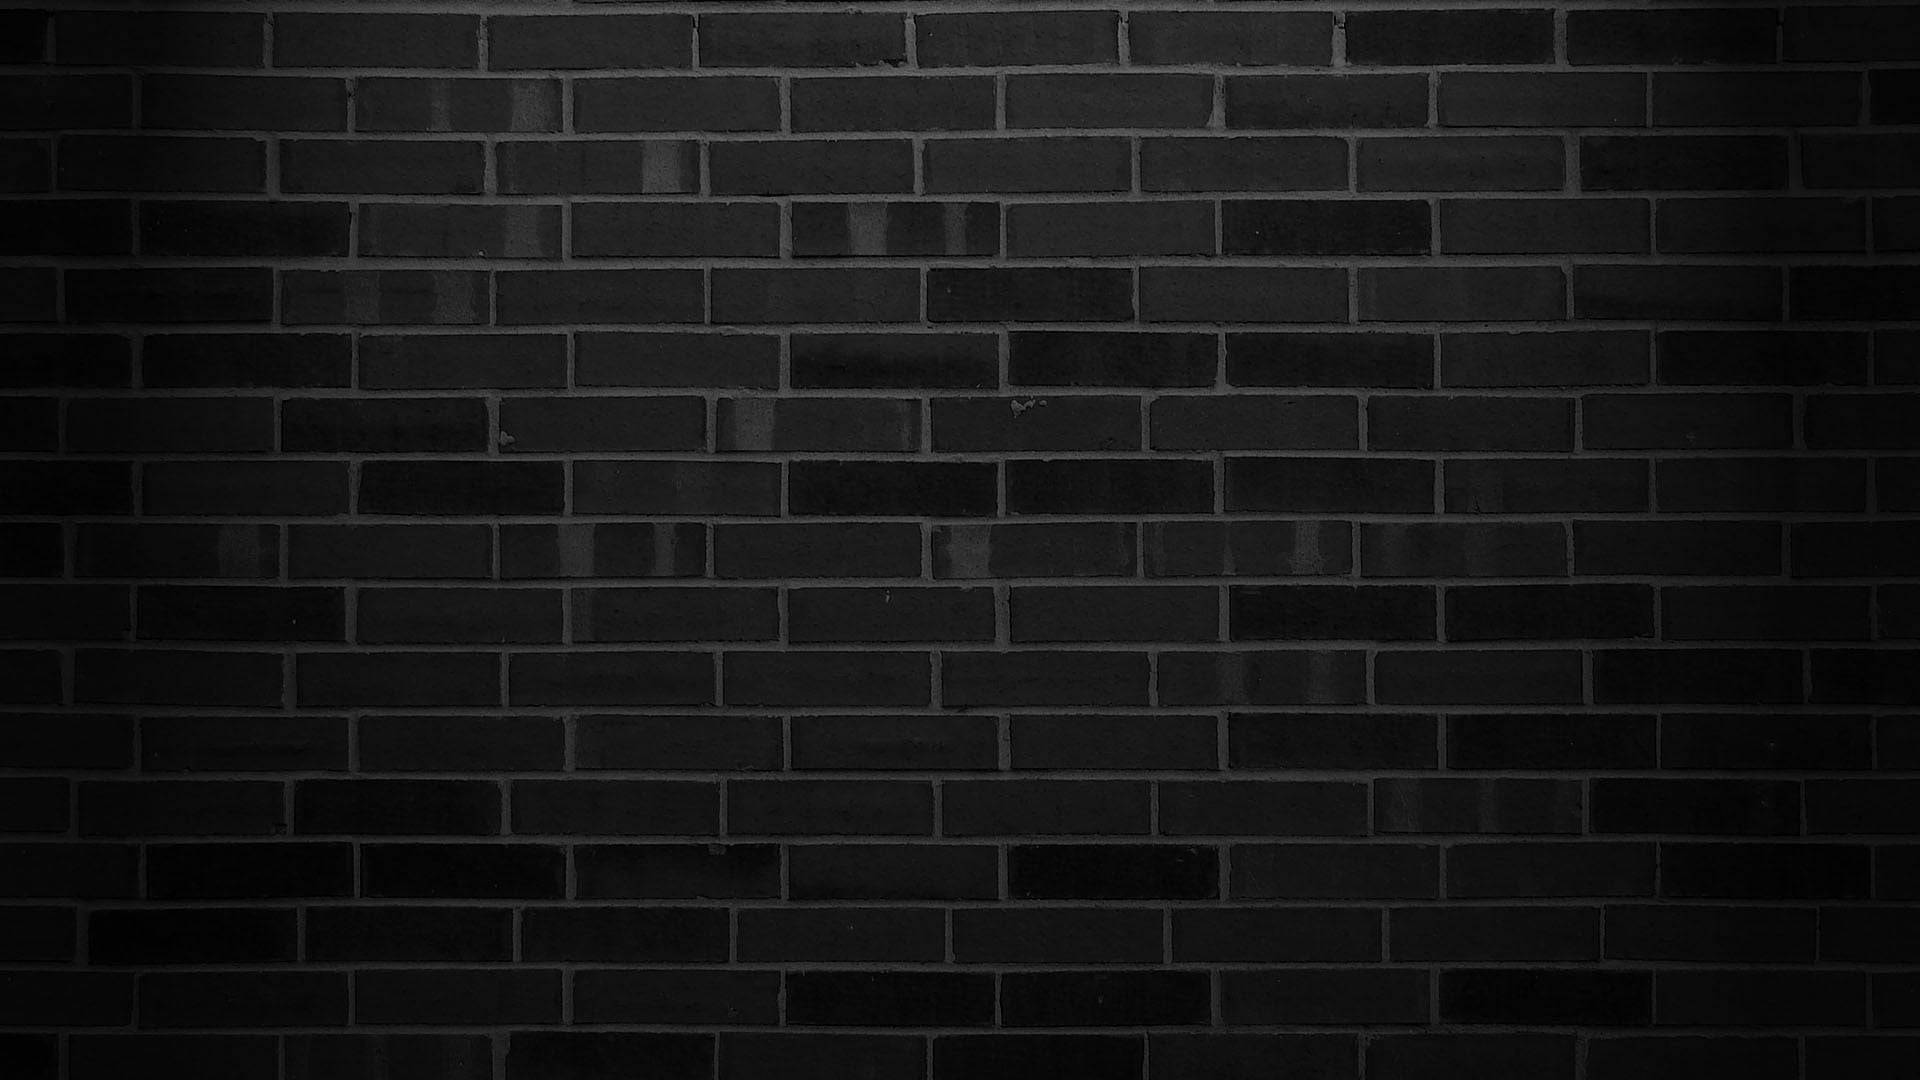 Caption: Aesthetic Monochrome Dark Brick Wall Wallpaper